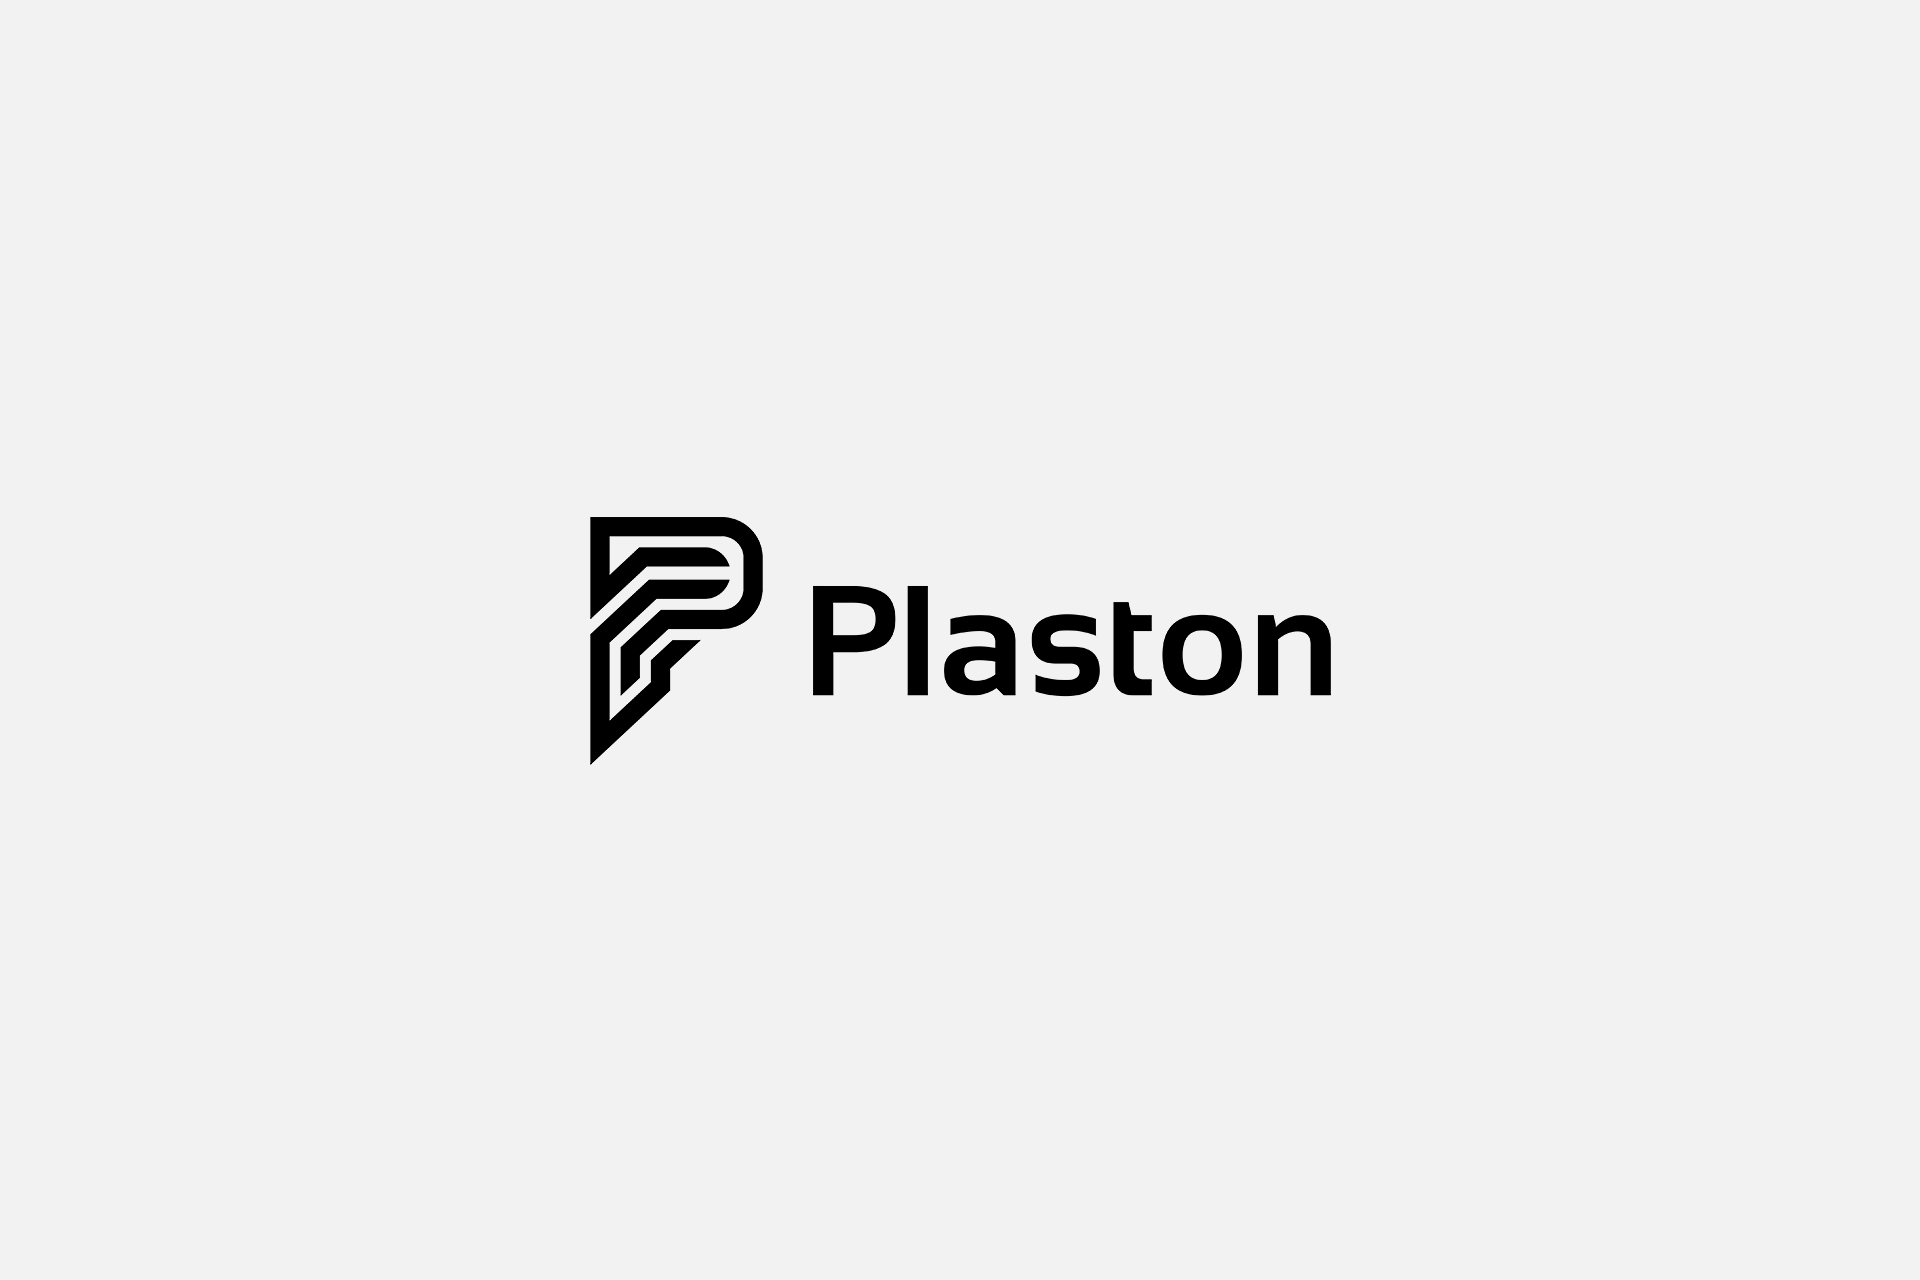 Logo design for Plaston production company